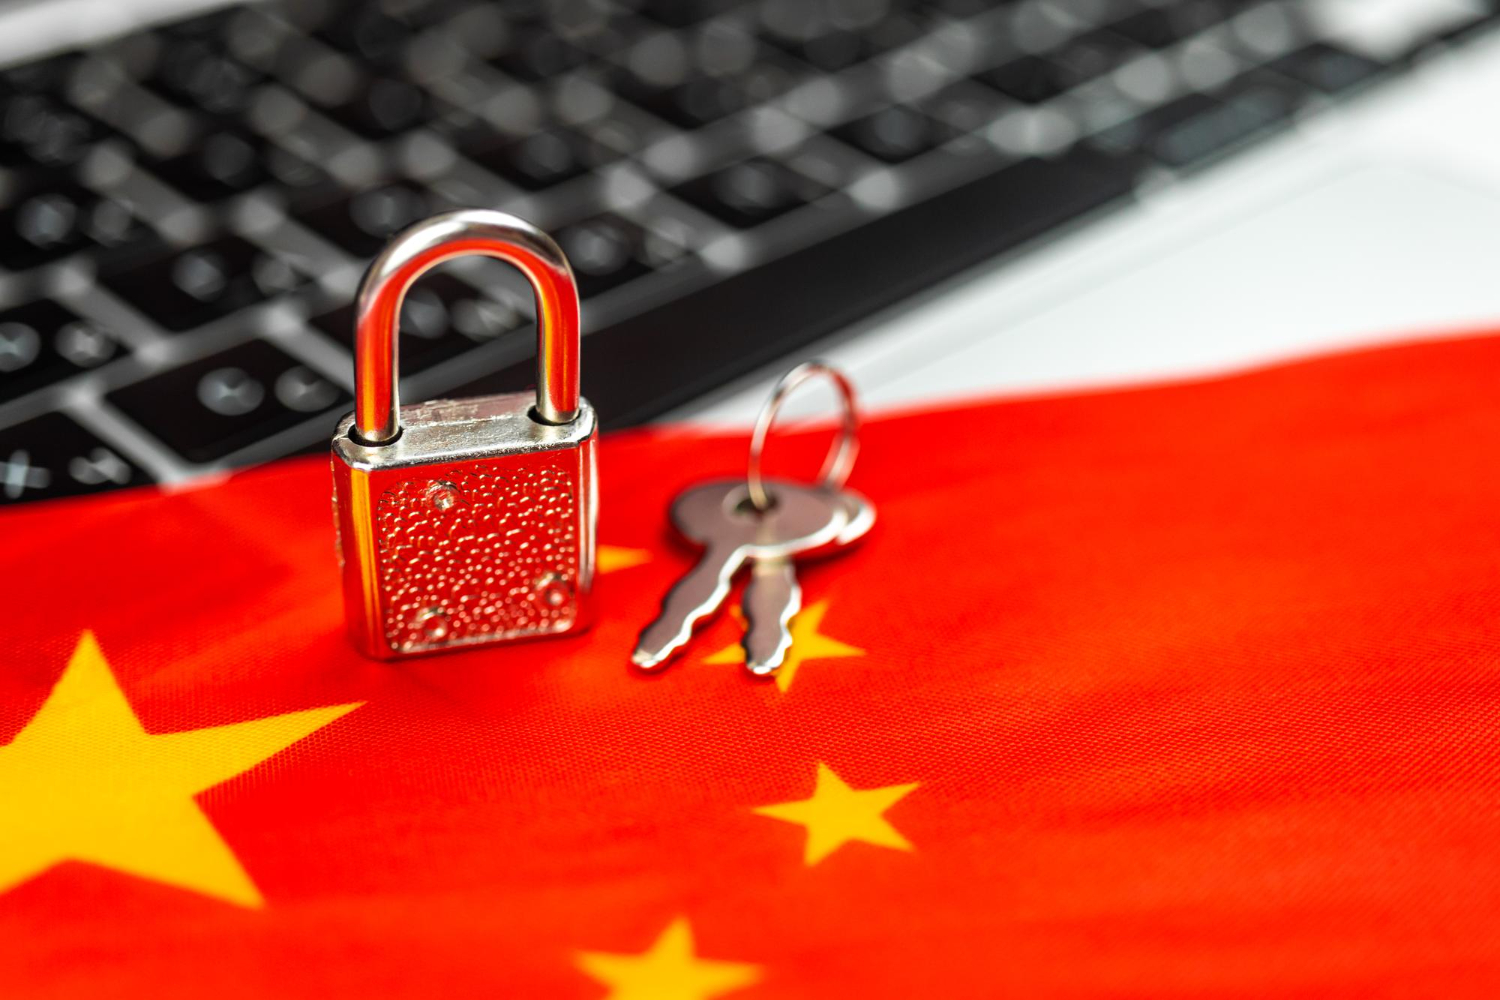 china cyber security concept padlock computer keyboard china flag